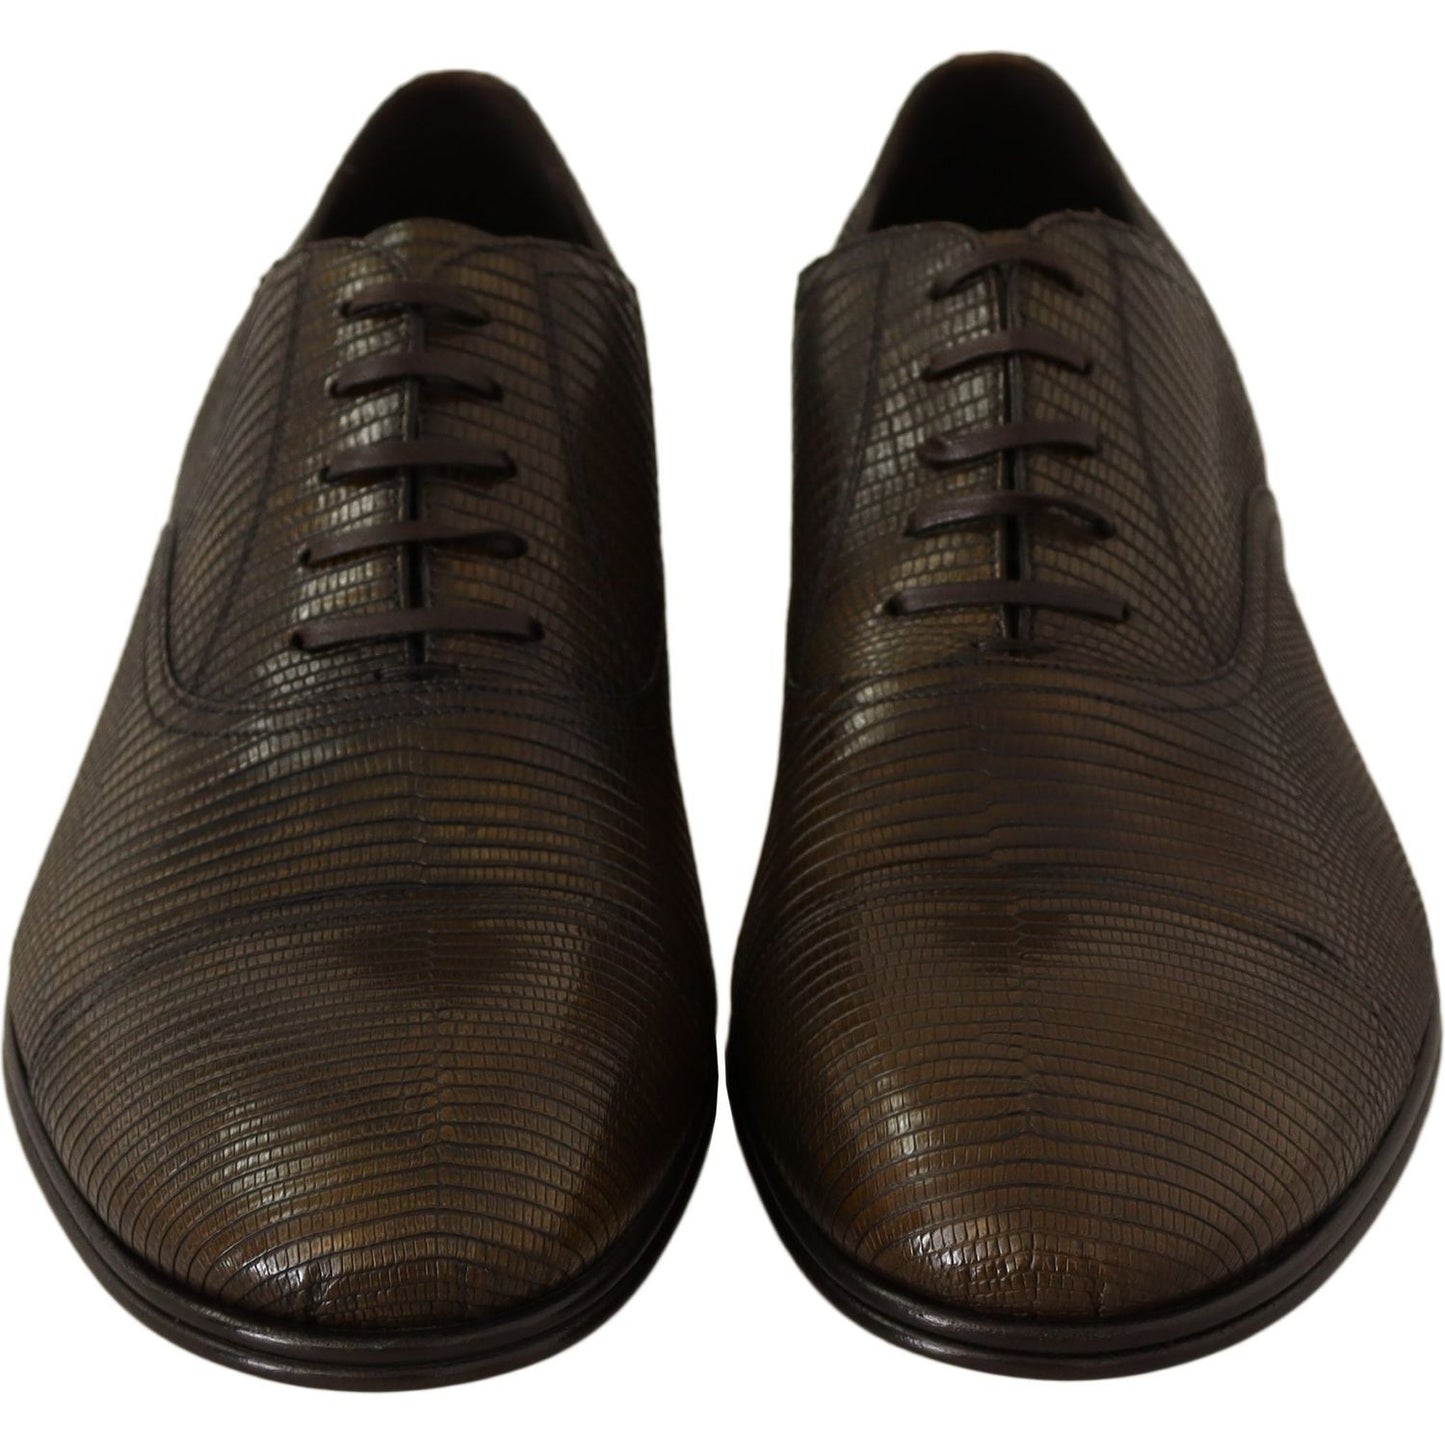 Dolce & Gabbana Elegant Shiny Leather Oxford Shoes brown-lizard-leather-dress-oxford-shoes Dress Shoes IMG_0052-scaled-27524518-103.jpg